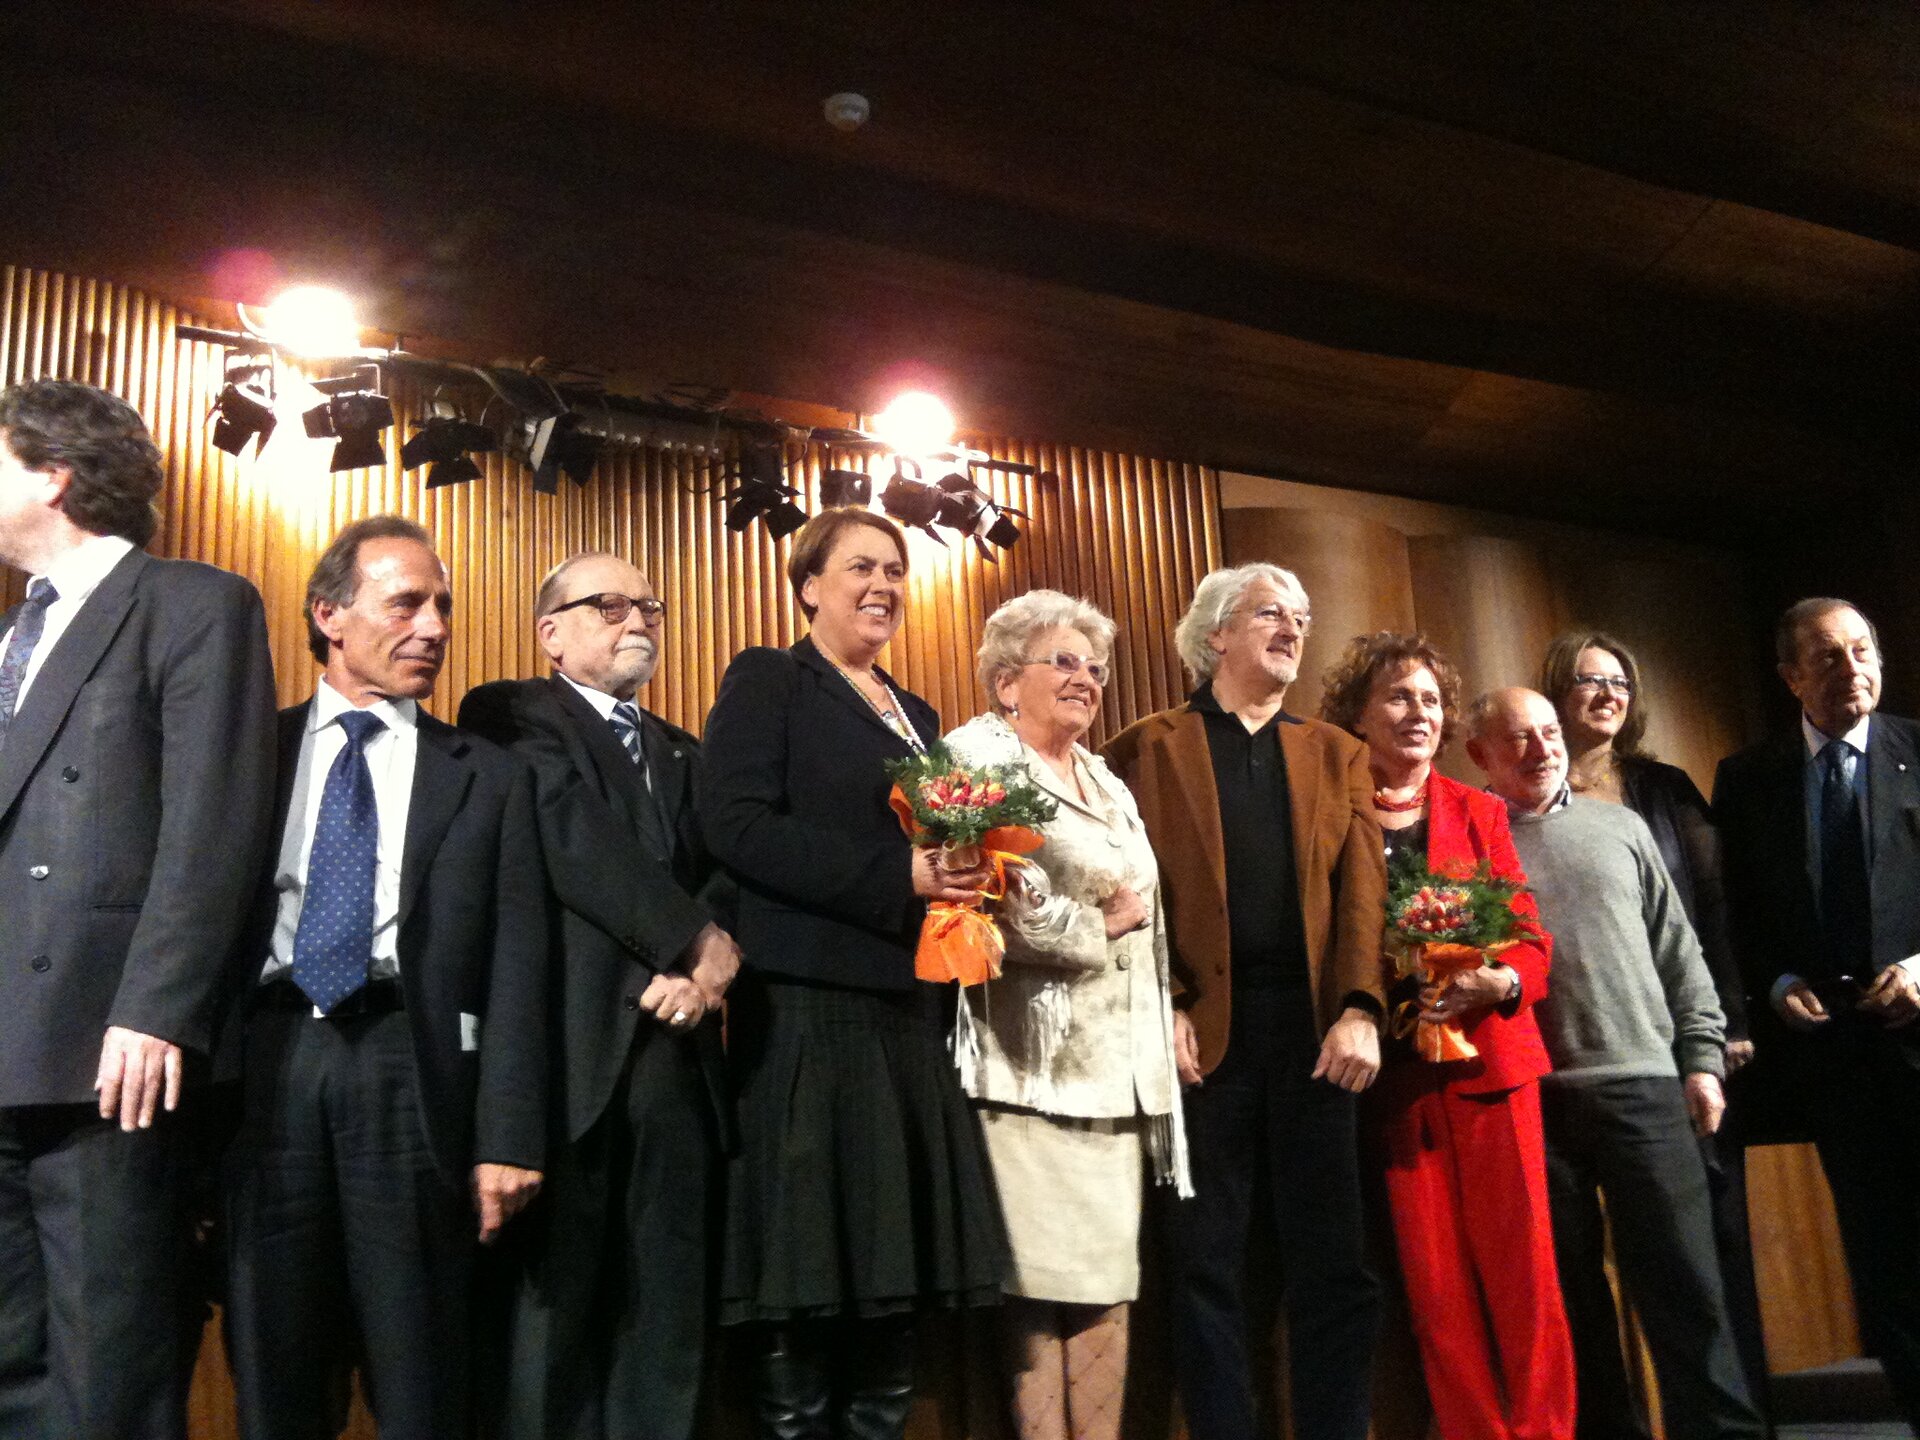 Simonetta Di Pippo, among other award winners of the "San Valentino d'Oro" in Terni, Italy.